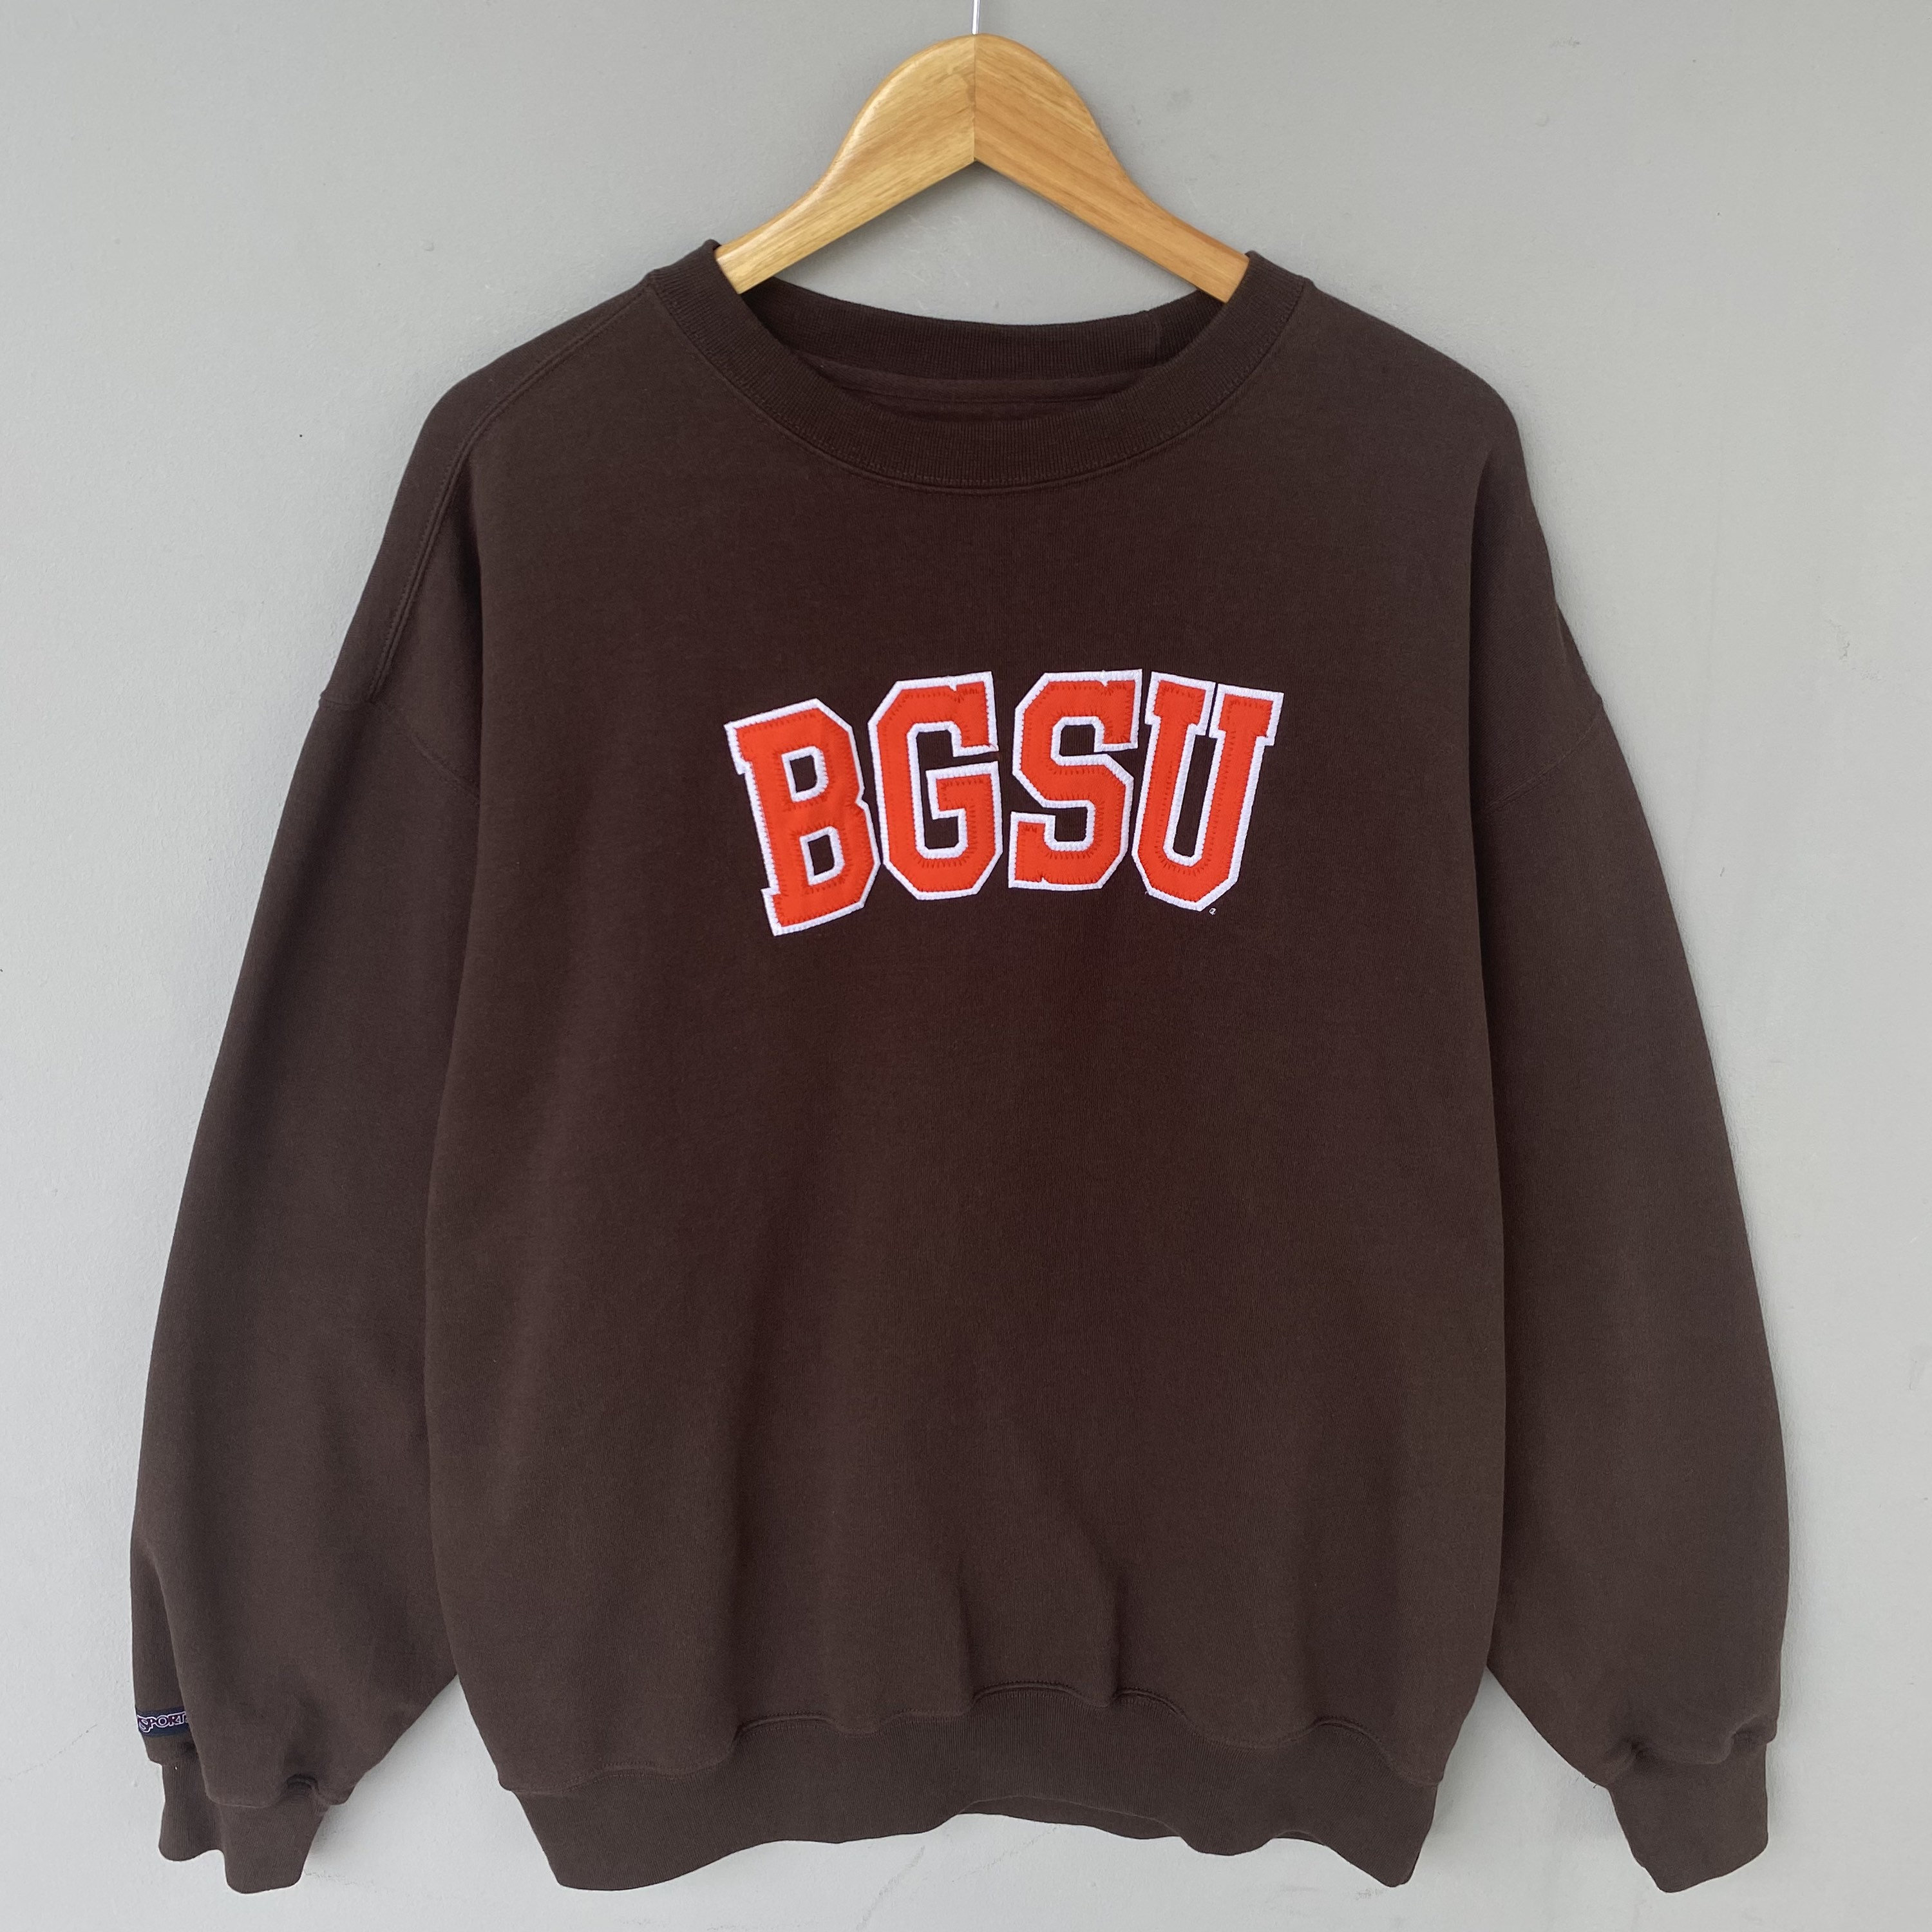 USA Johnson City Sweatshirt – Budaya Vintage